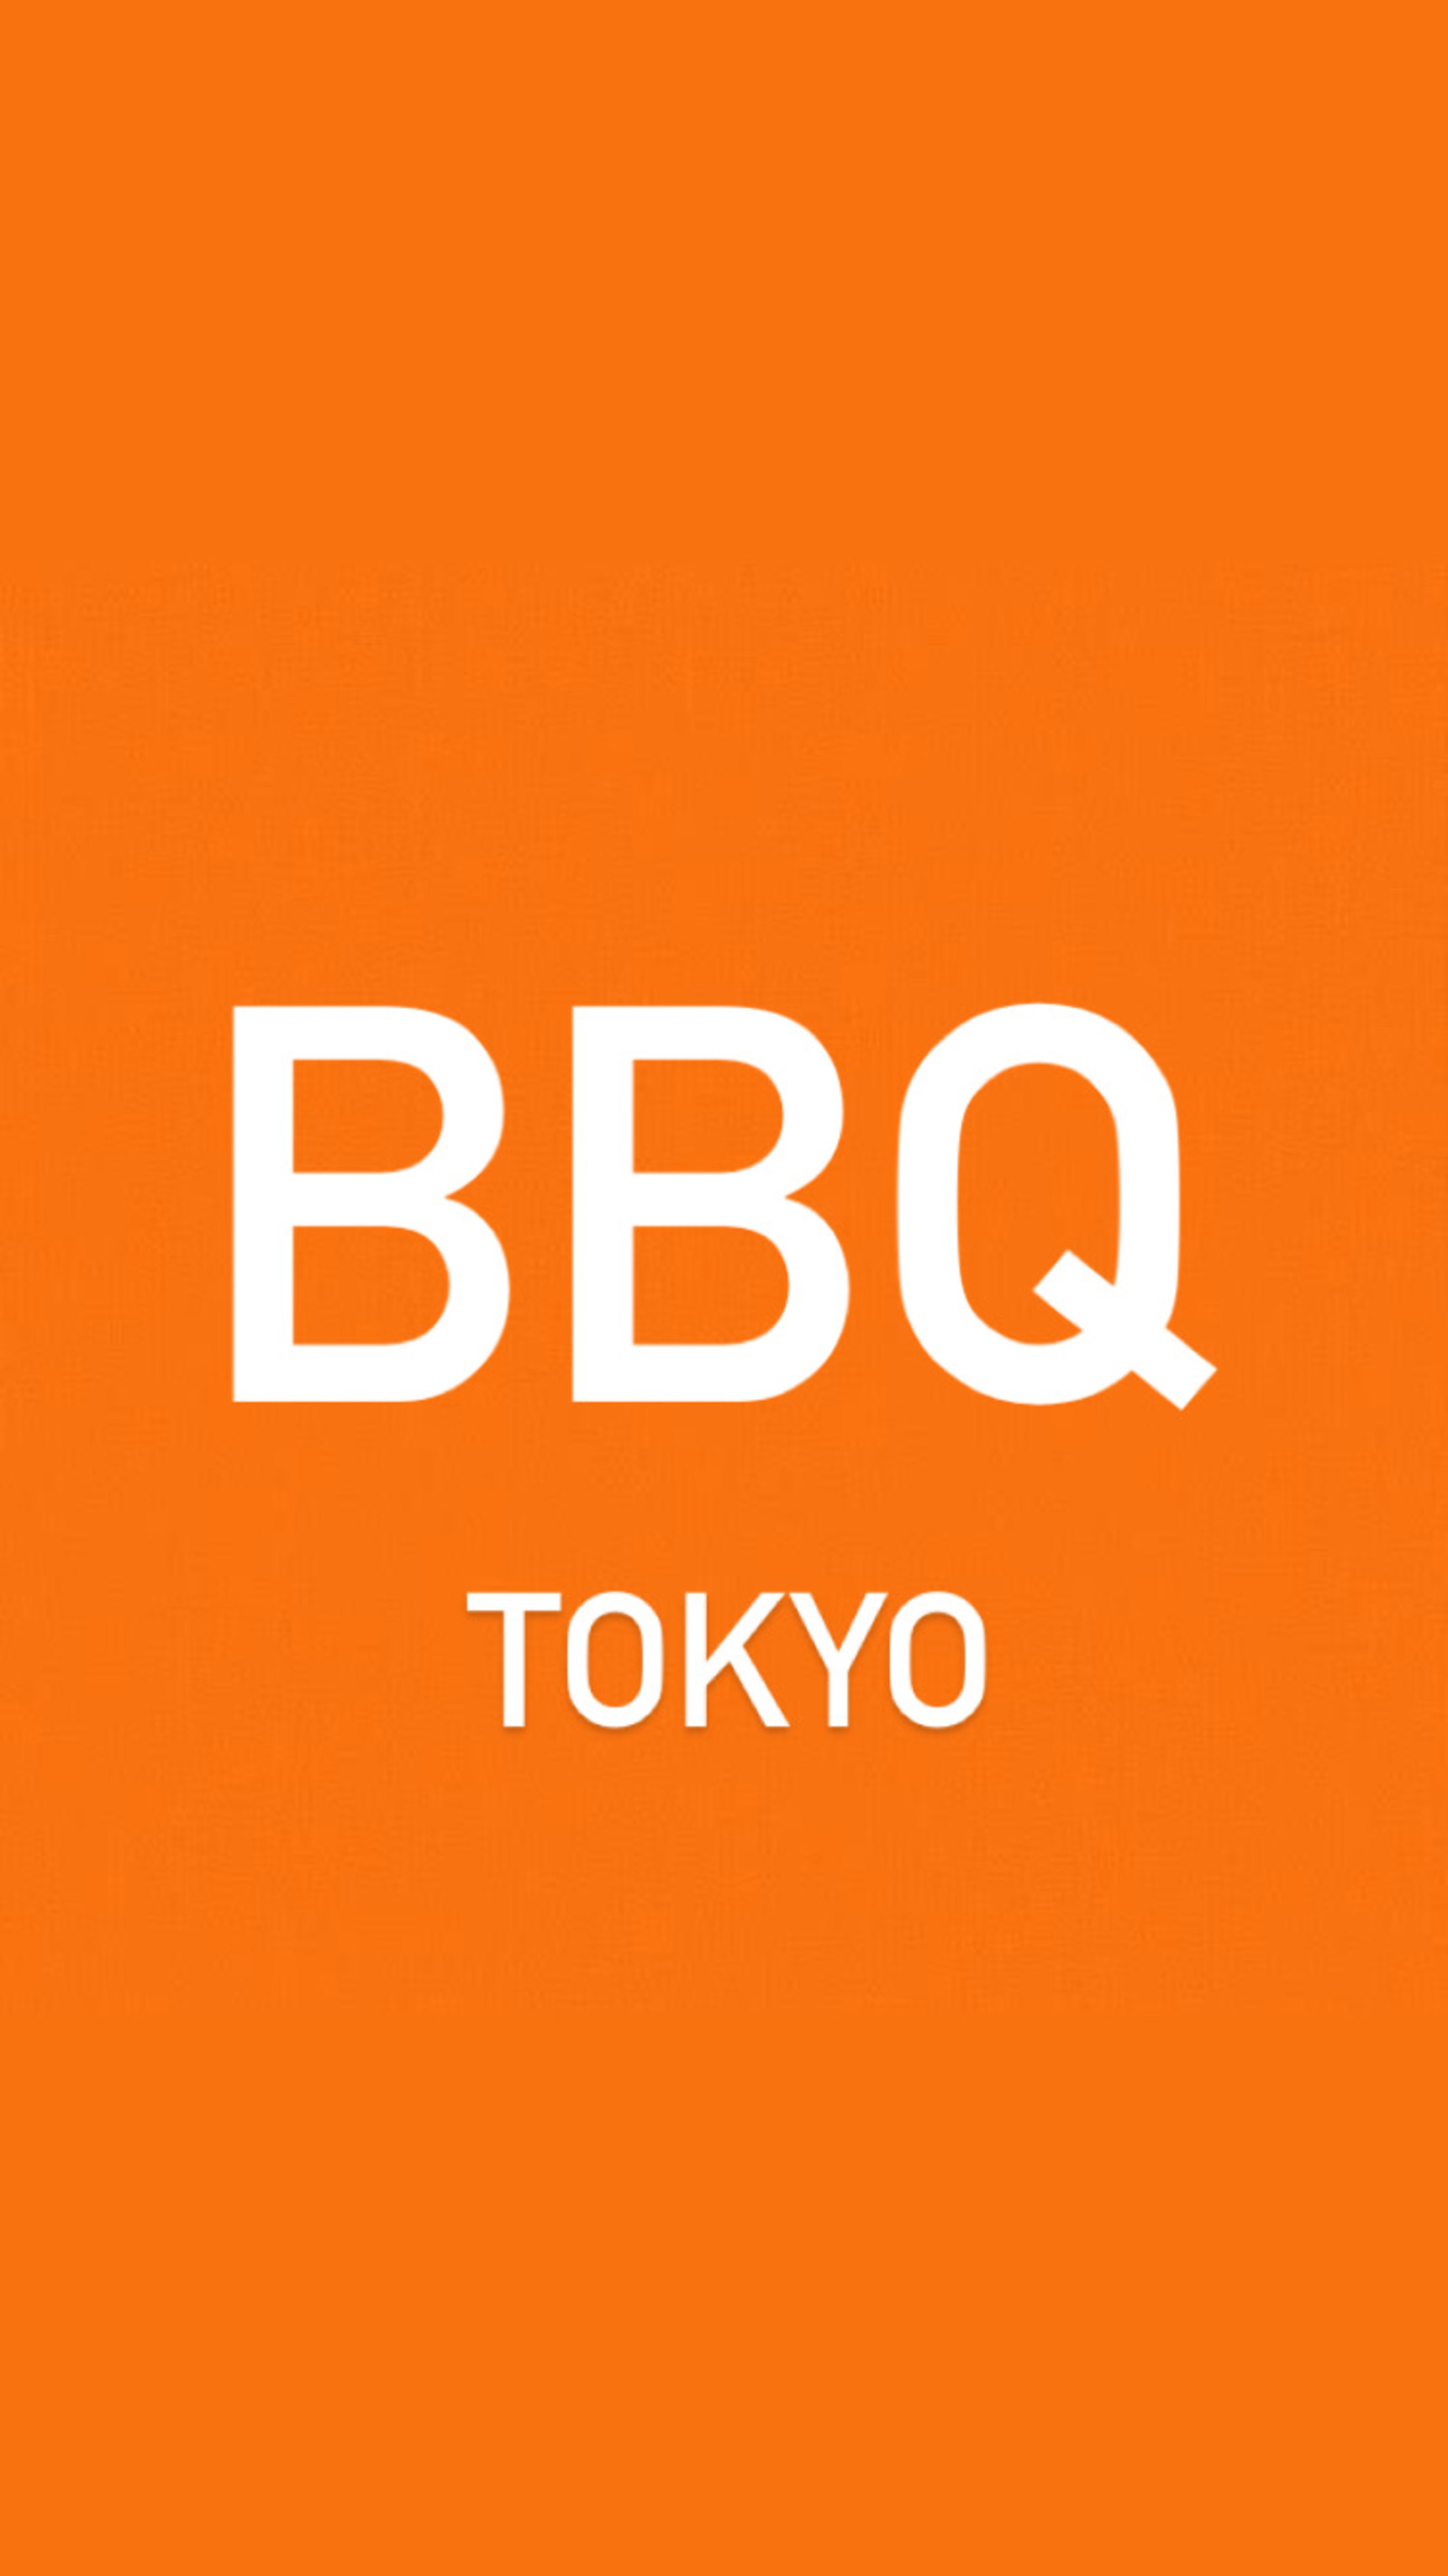 BBQ TOKYO